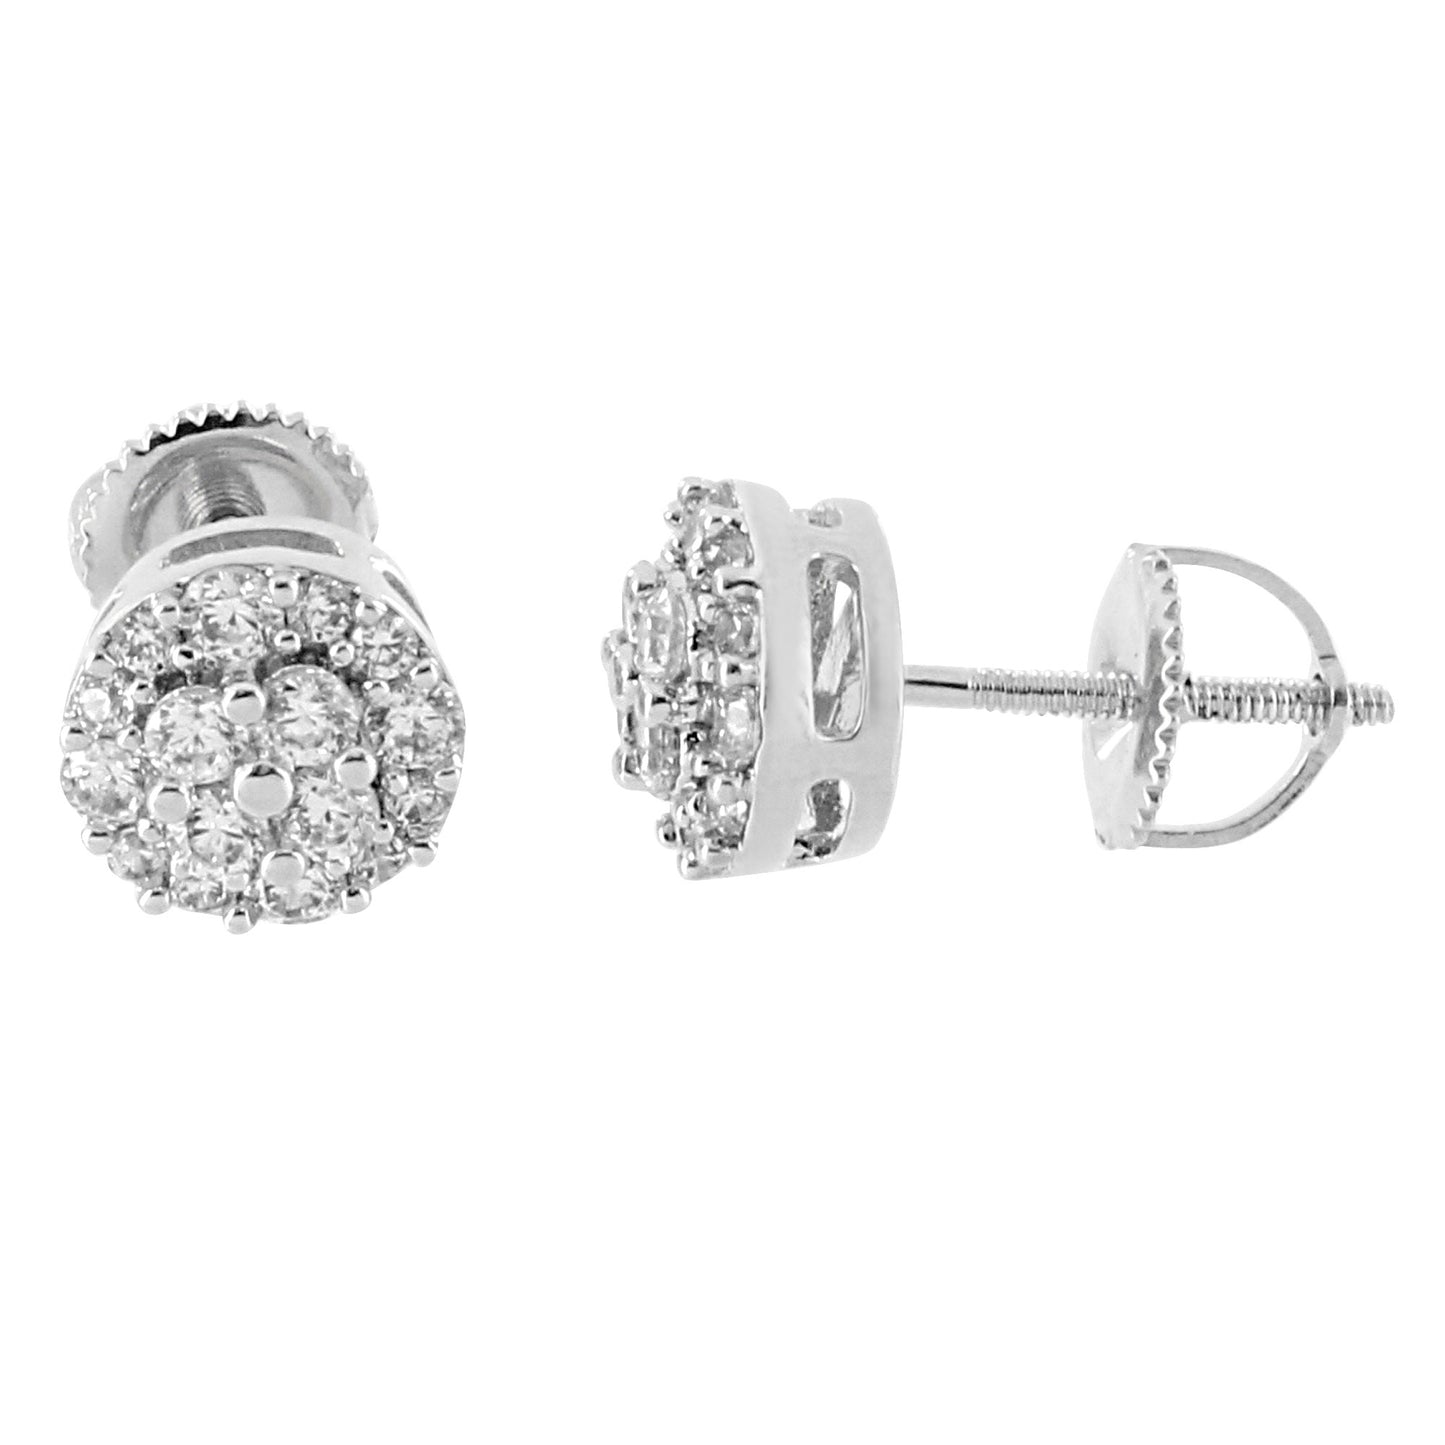 Round Prong Set Earrings Cluster Simualted Diamonds 14K White Gold Finish Screw Back